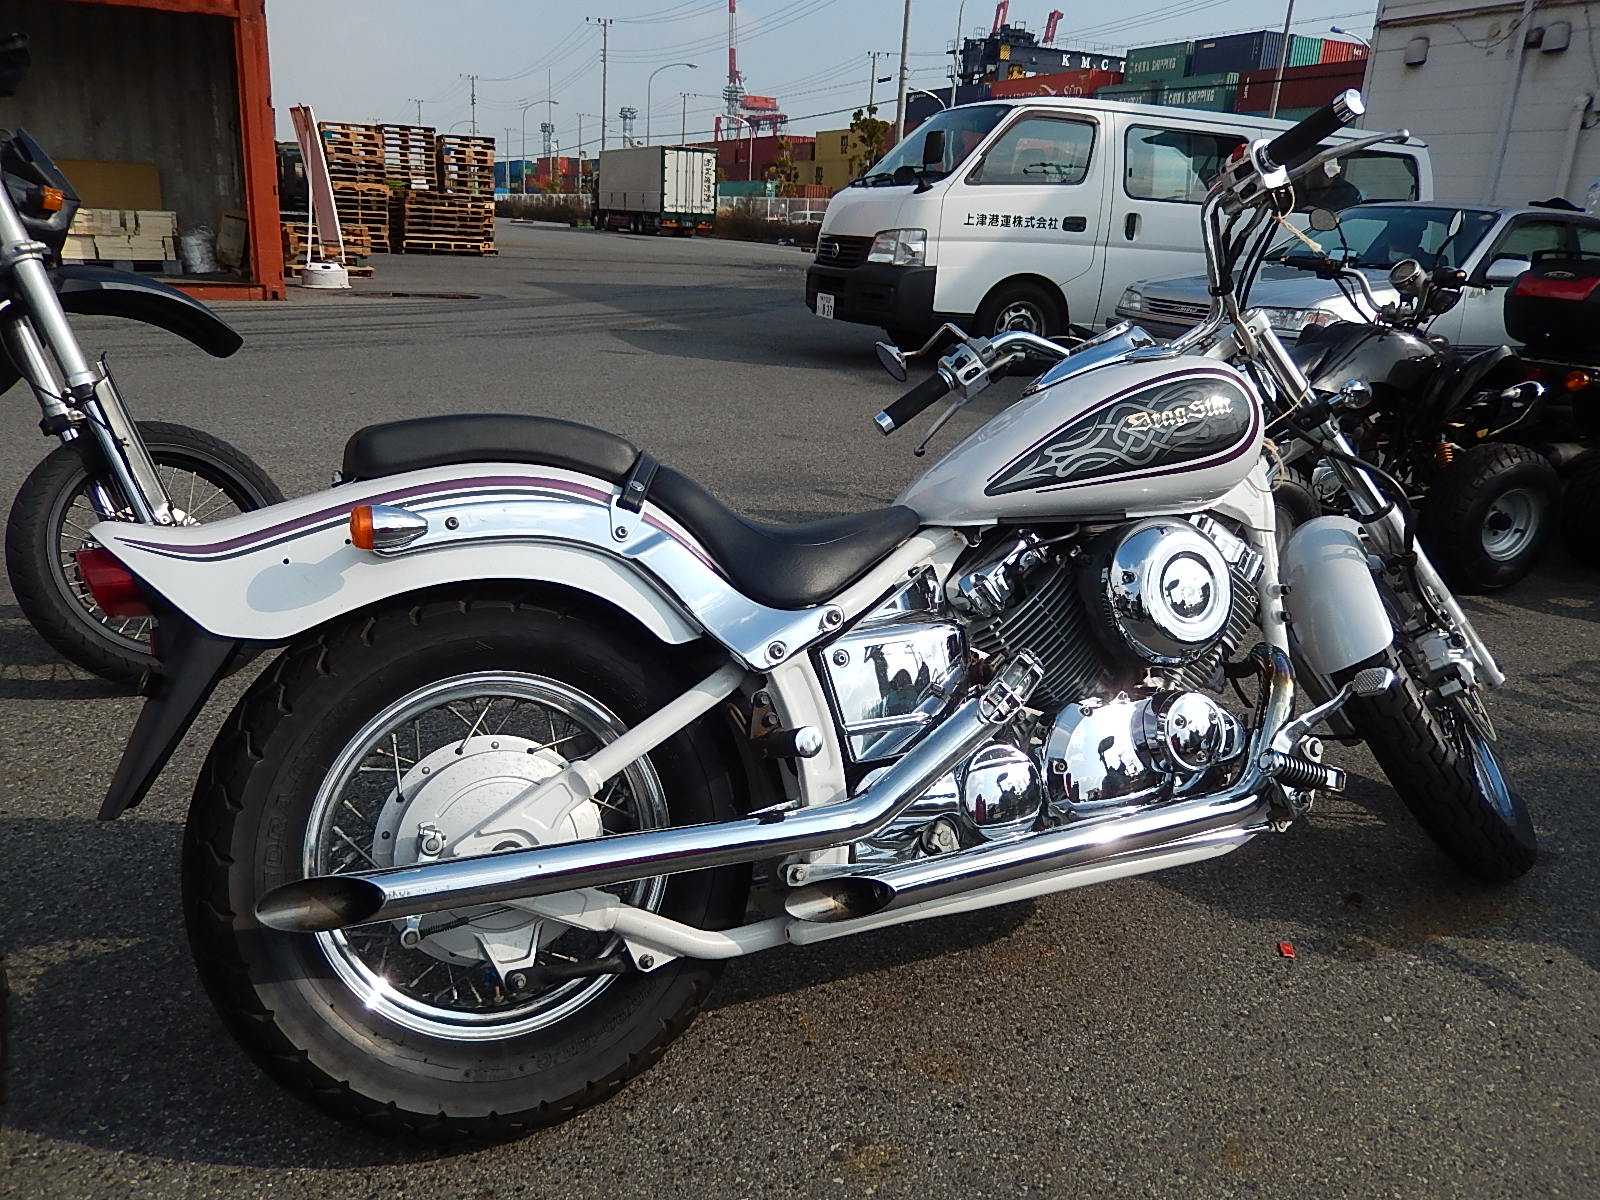 Мотоцикл yamaha xvs 1100 drag star (v-star 1100): обзор, характеристики, отзывы